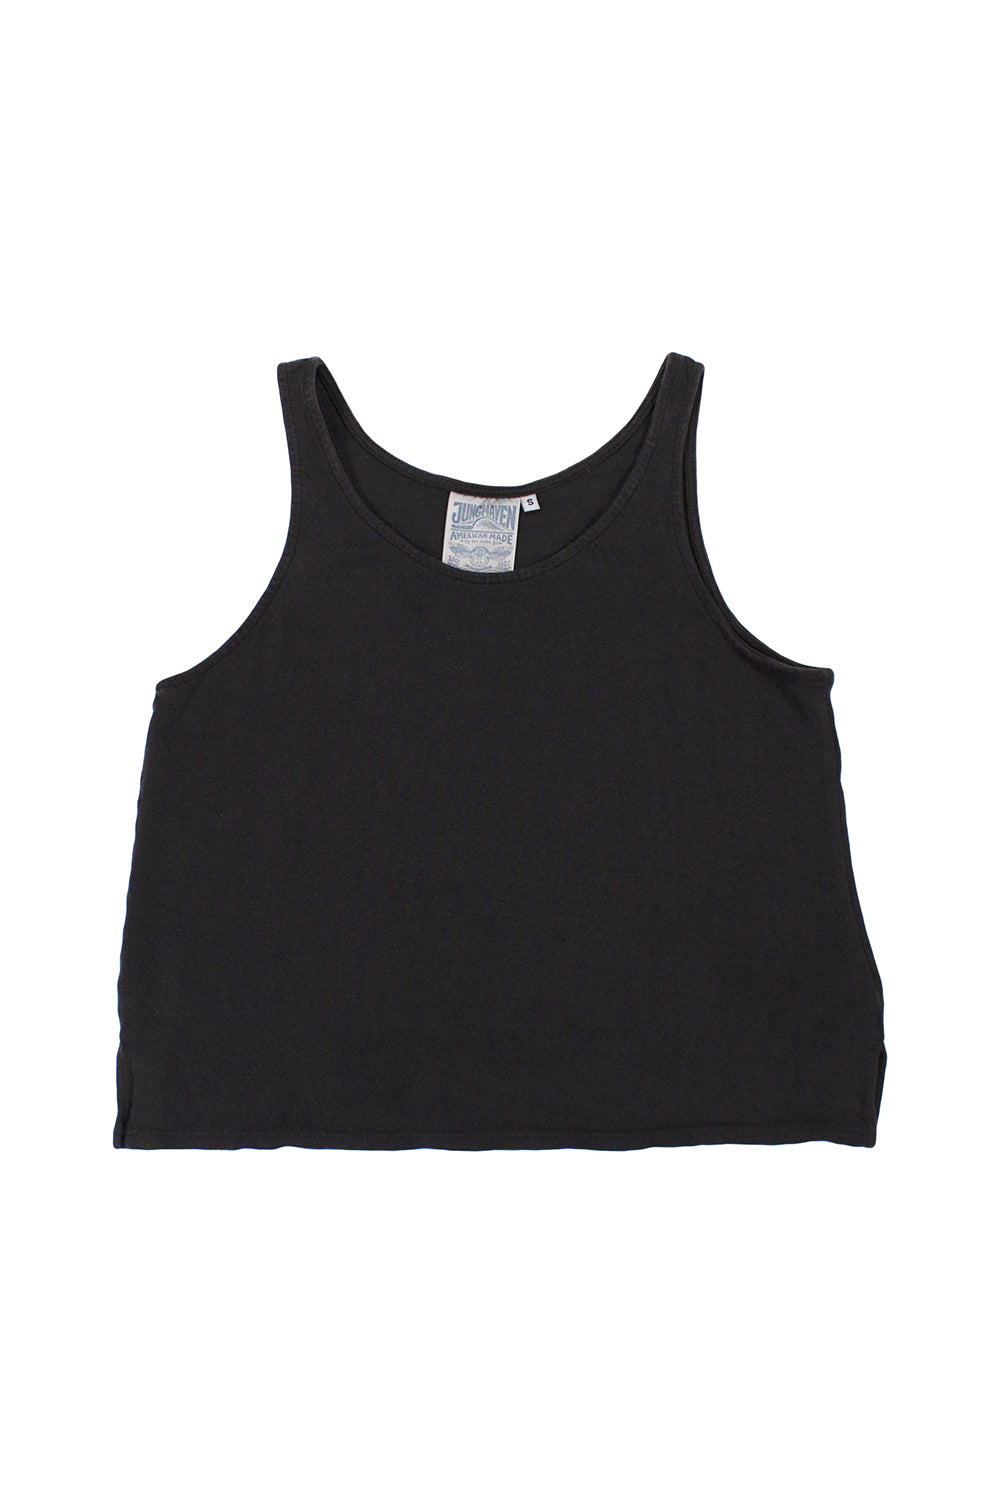 100% Hemp Cropped Tank | Jungmaven Hemp Clothing & Accessories / Color: Black